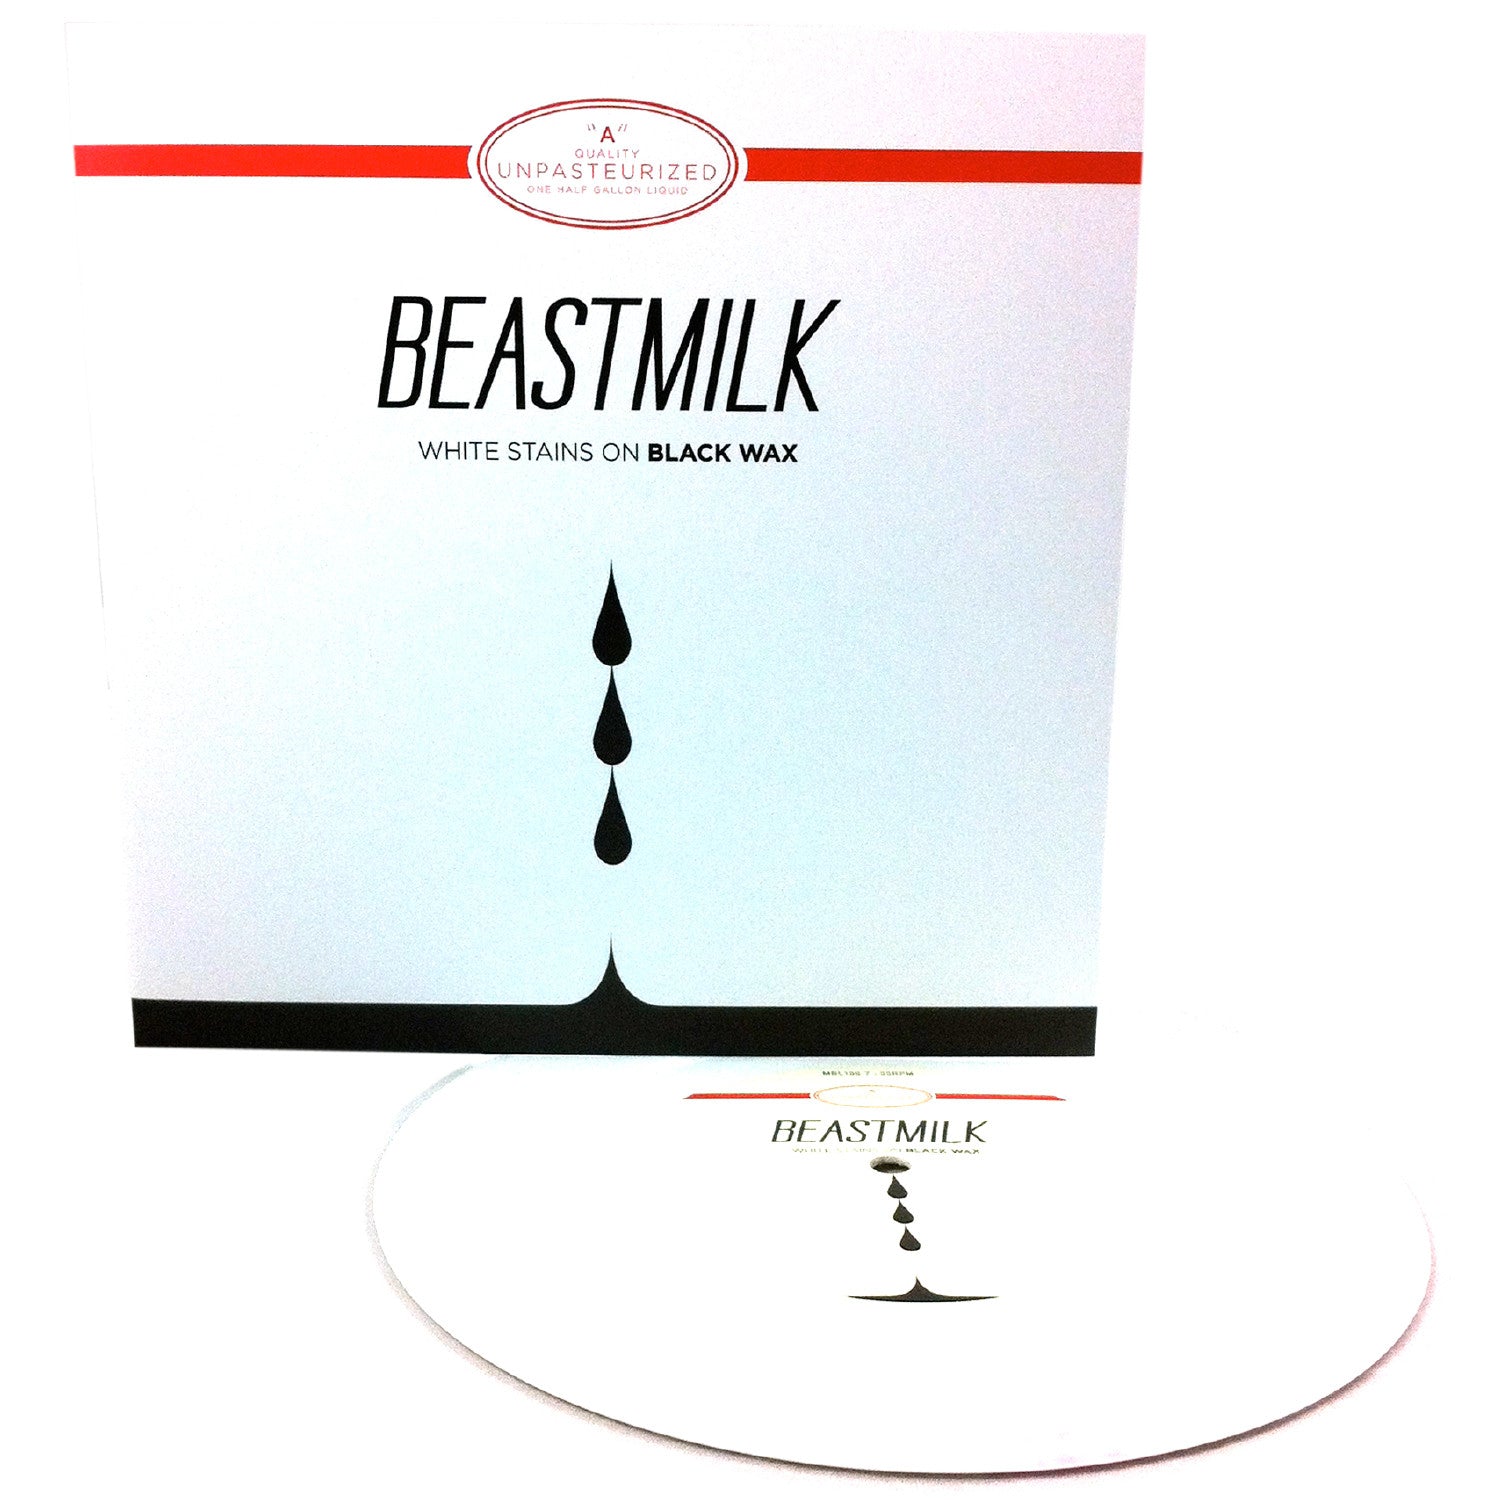 Beastmilk - White Stains on Black Wax - New 7" Single Record 2014 Magic Bullet USA White Vinyl - Goth Rock / Post-Punk / Deathrock